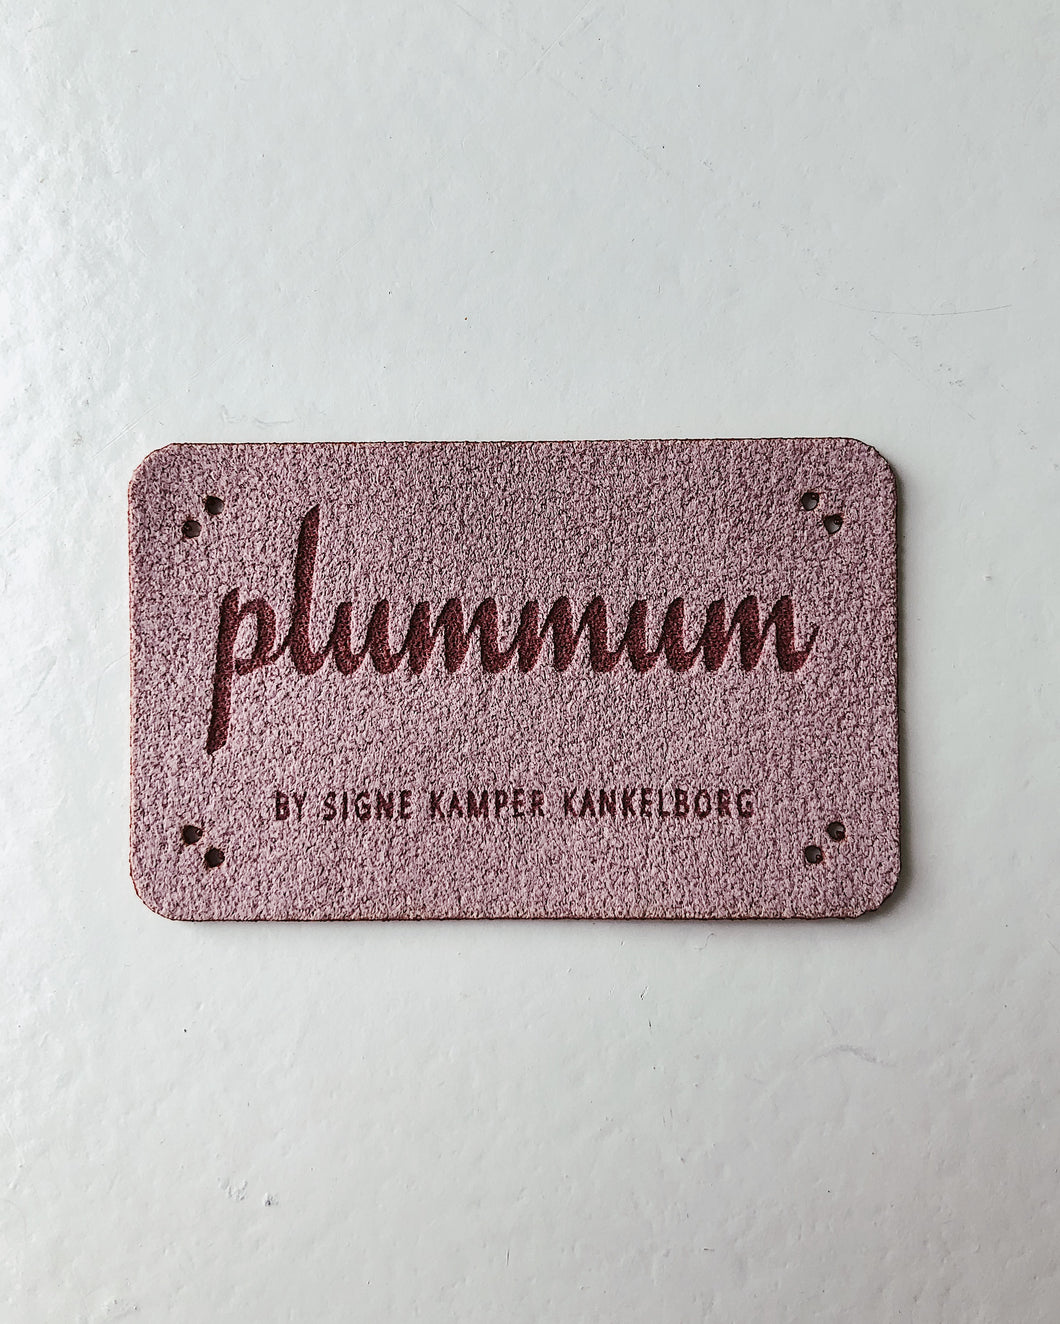 Plummum-labels i Ultrasuede